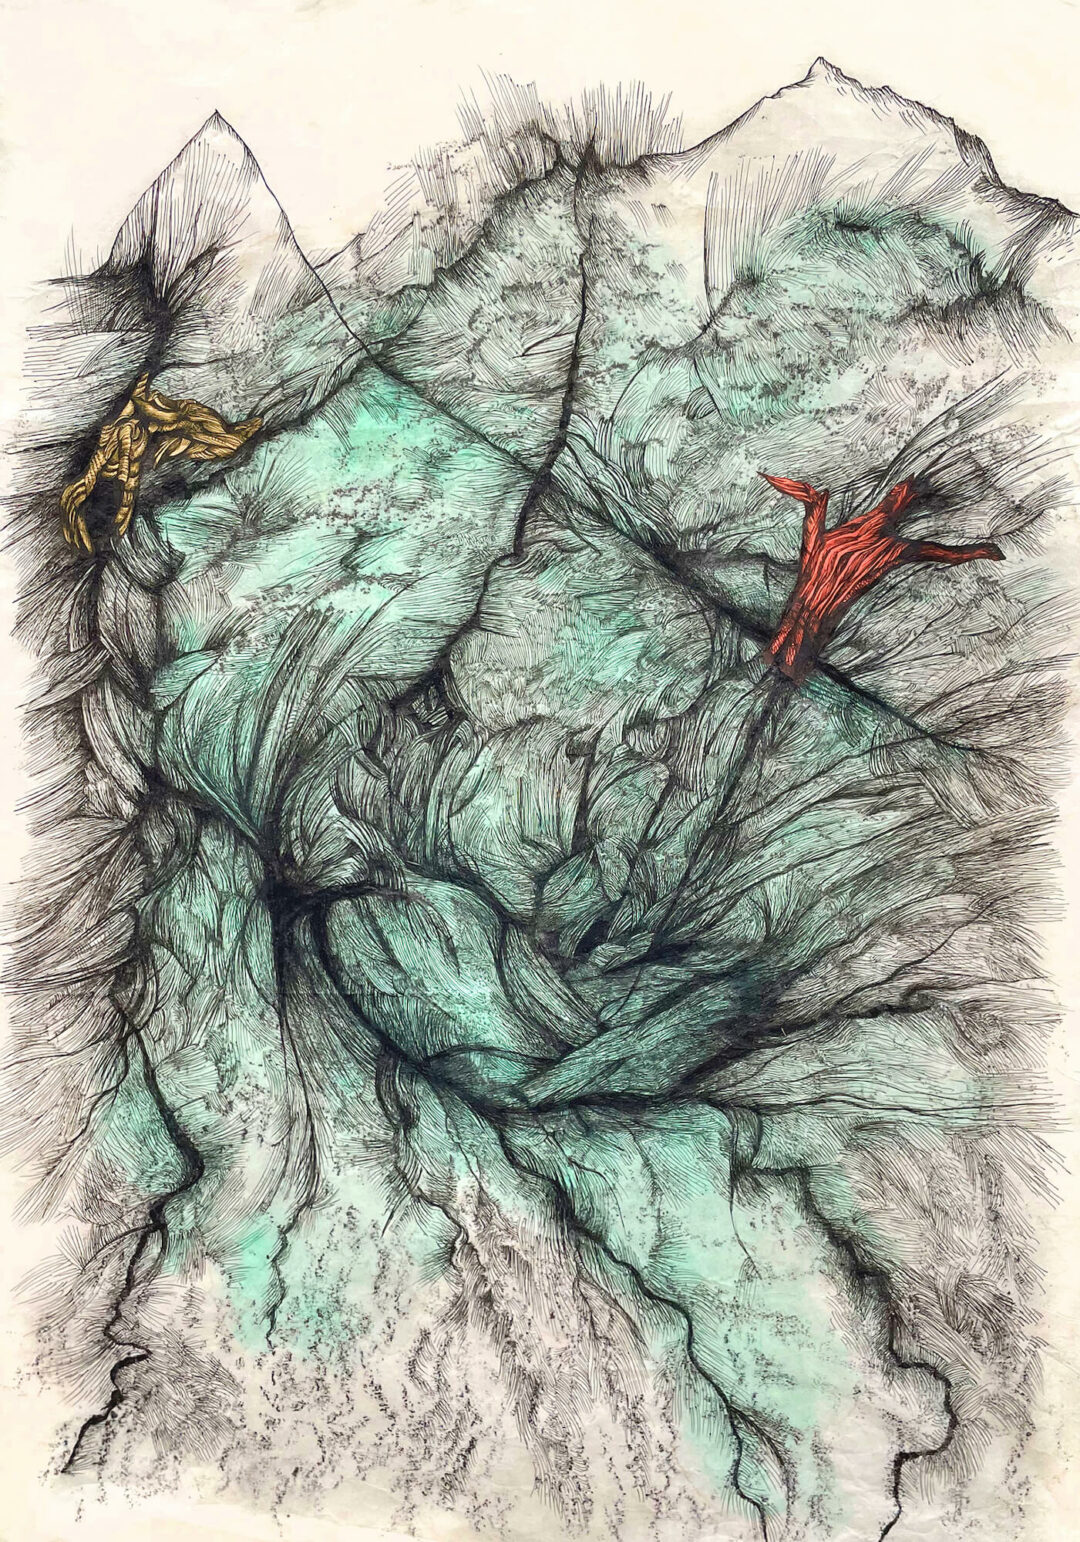 Zea Morvitz - Plain of Dreams - ink, watercolor, collage - 30x22